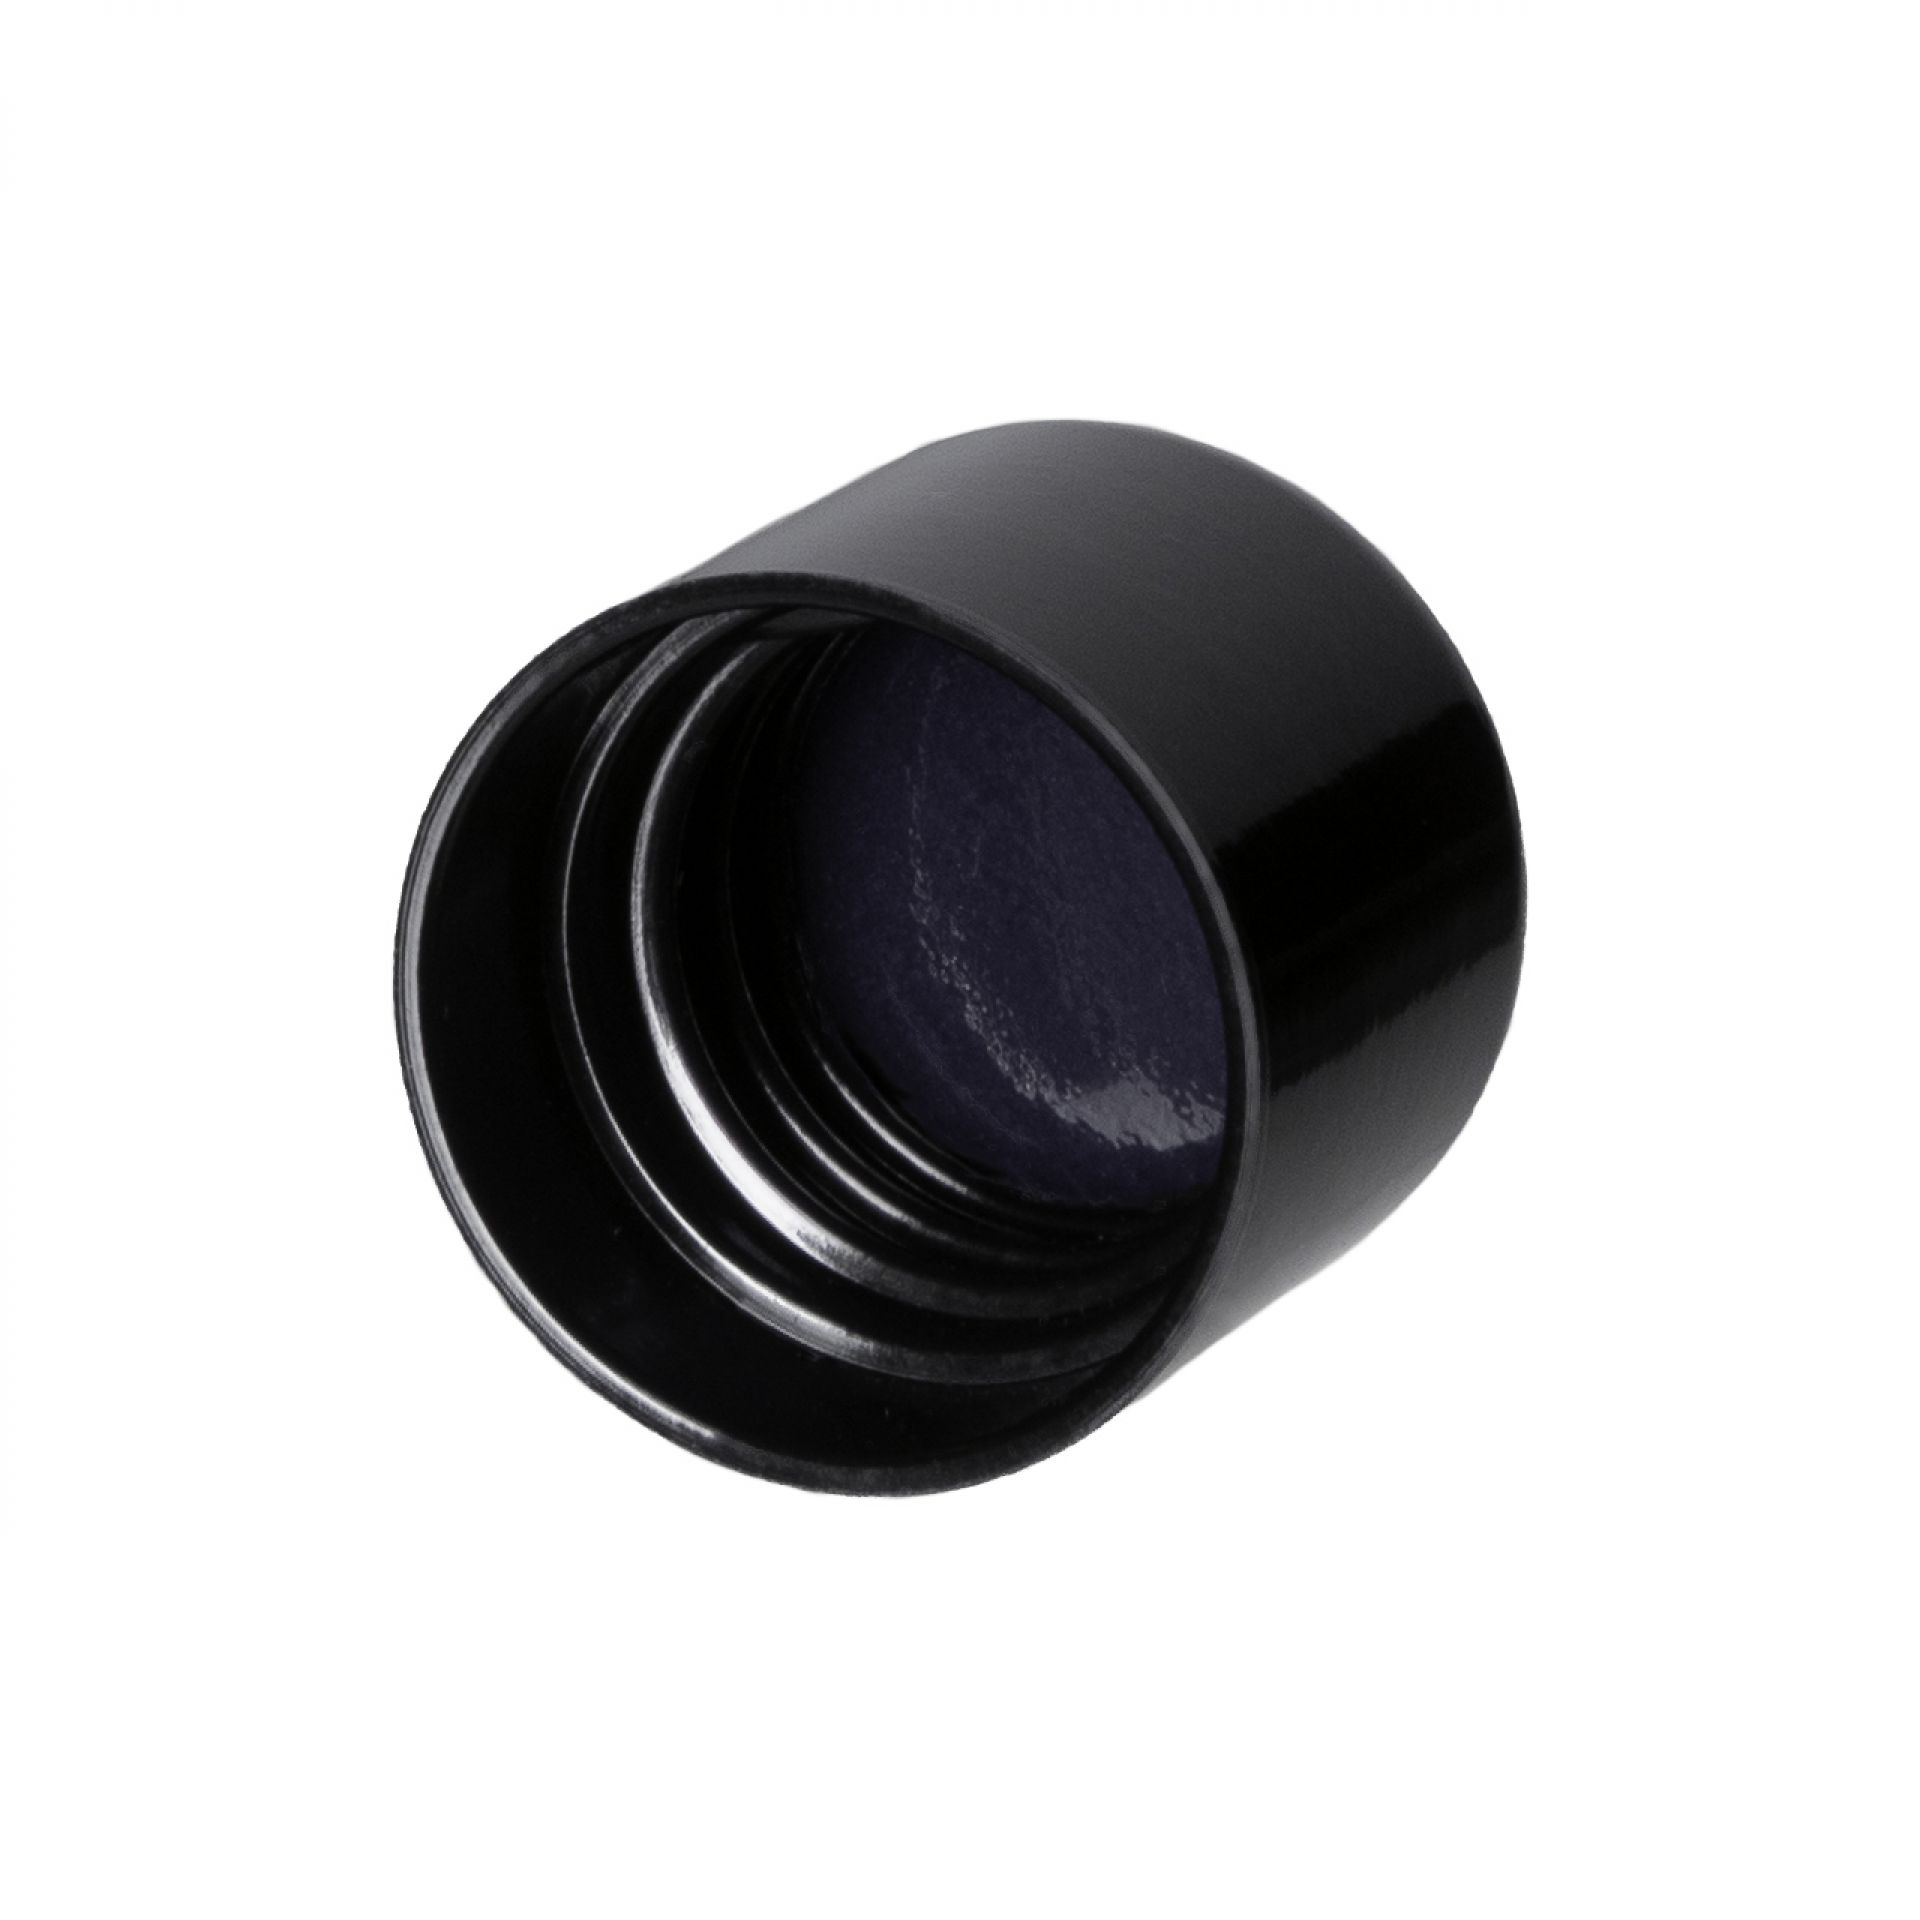 Screw cap DIN18, Urea, black, semi-glossy finish, violet Phan inlay (dropper bottles)